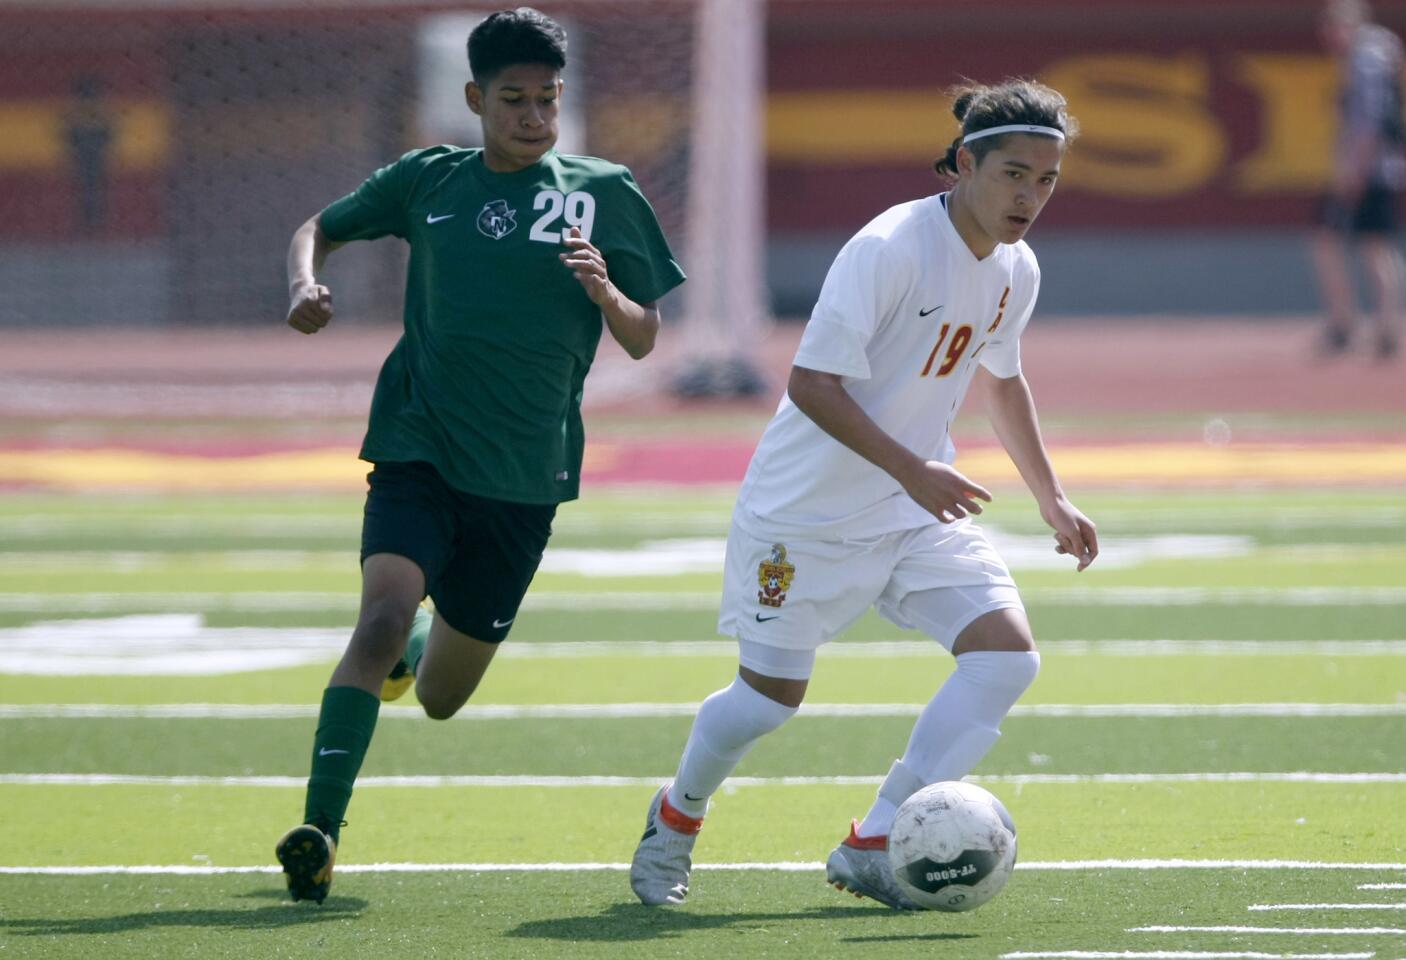 Photo Gallery: La Cañada High School boys soccer advances in CIF playoffs in thriller match vs. Nogales High School